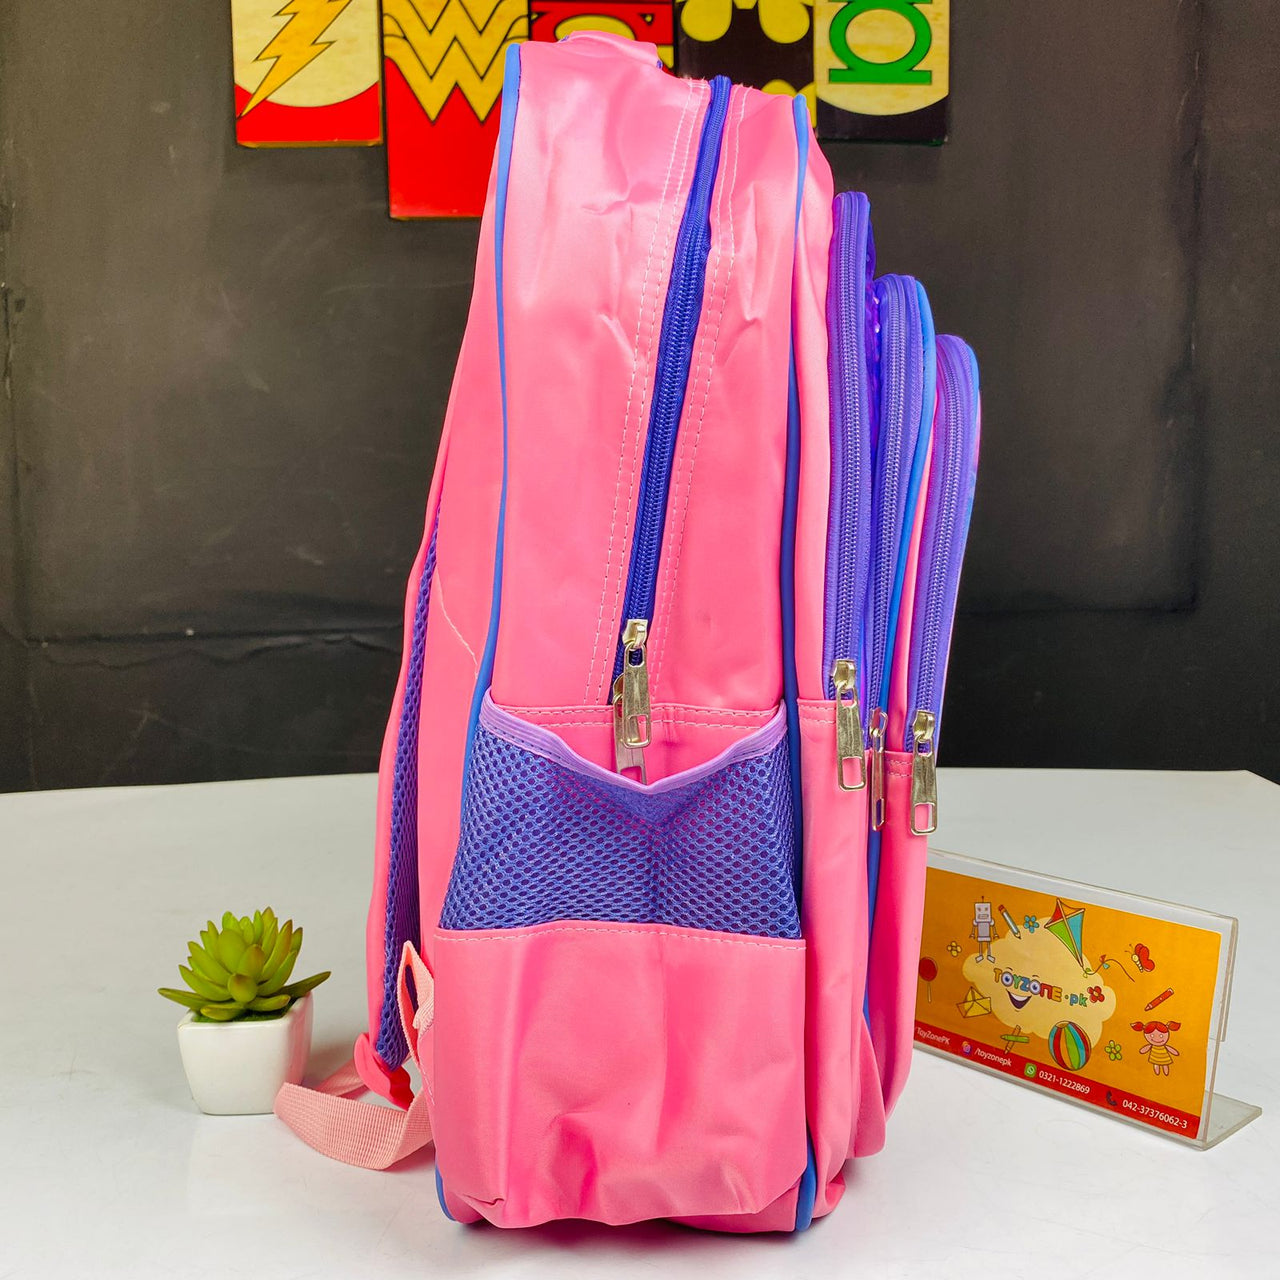 Frozen Girl Printed School Bag For Kids